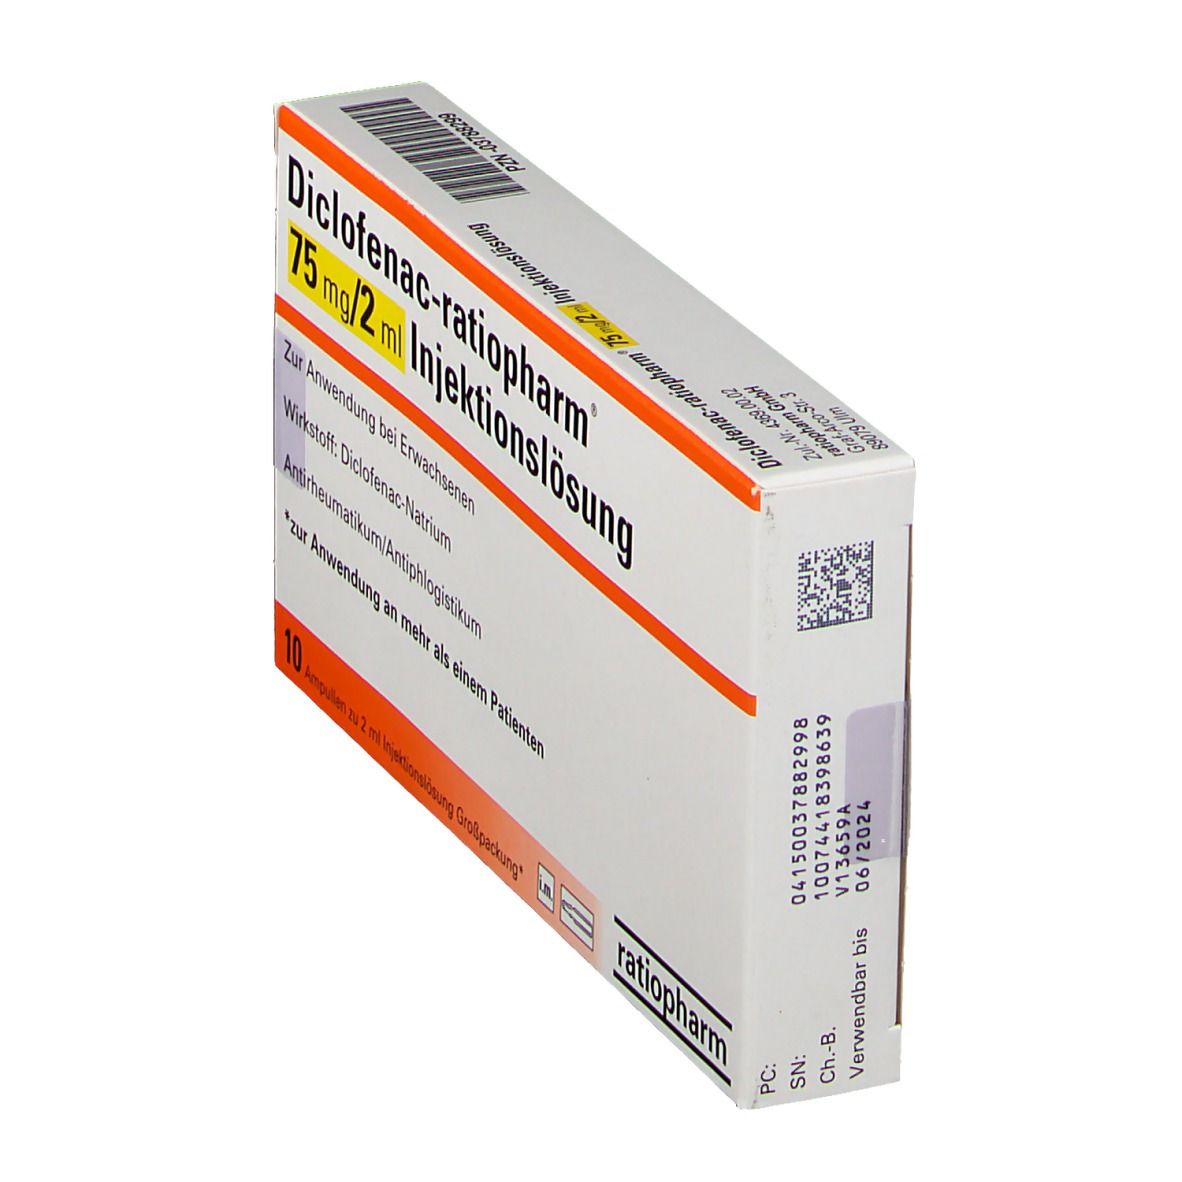 Diclofenac-ratiopharm® 75 mg/2 ml